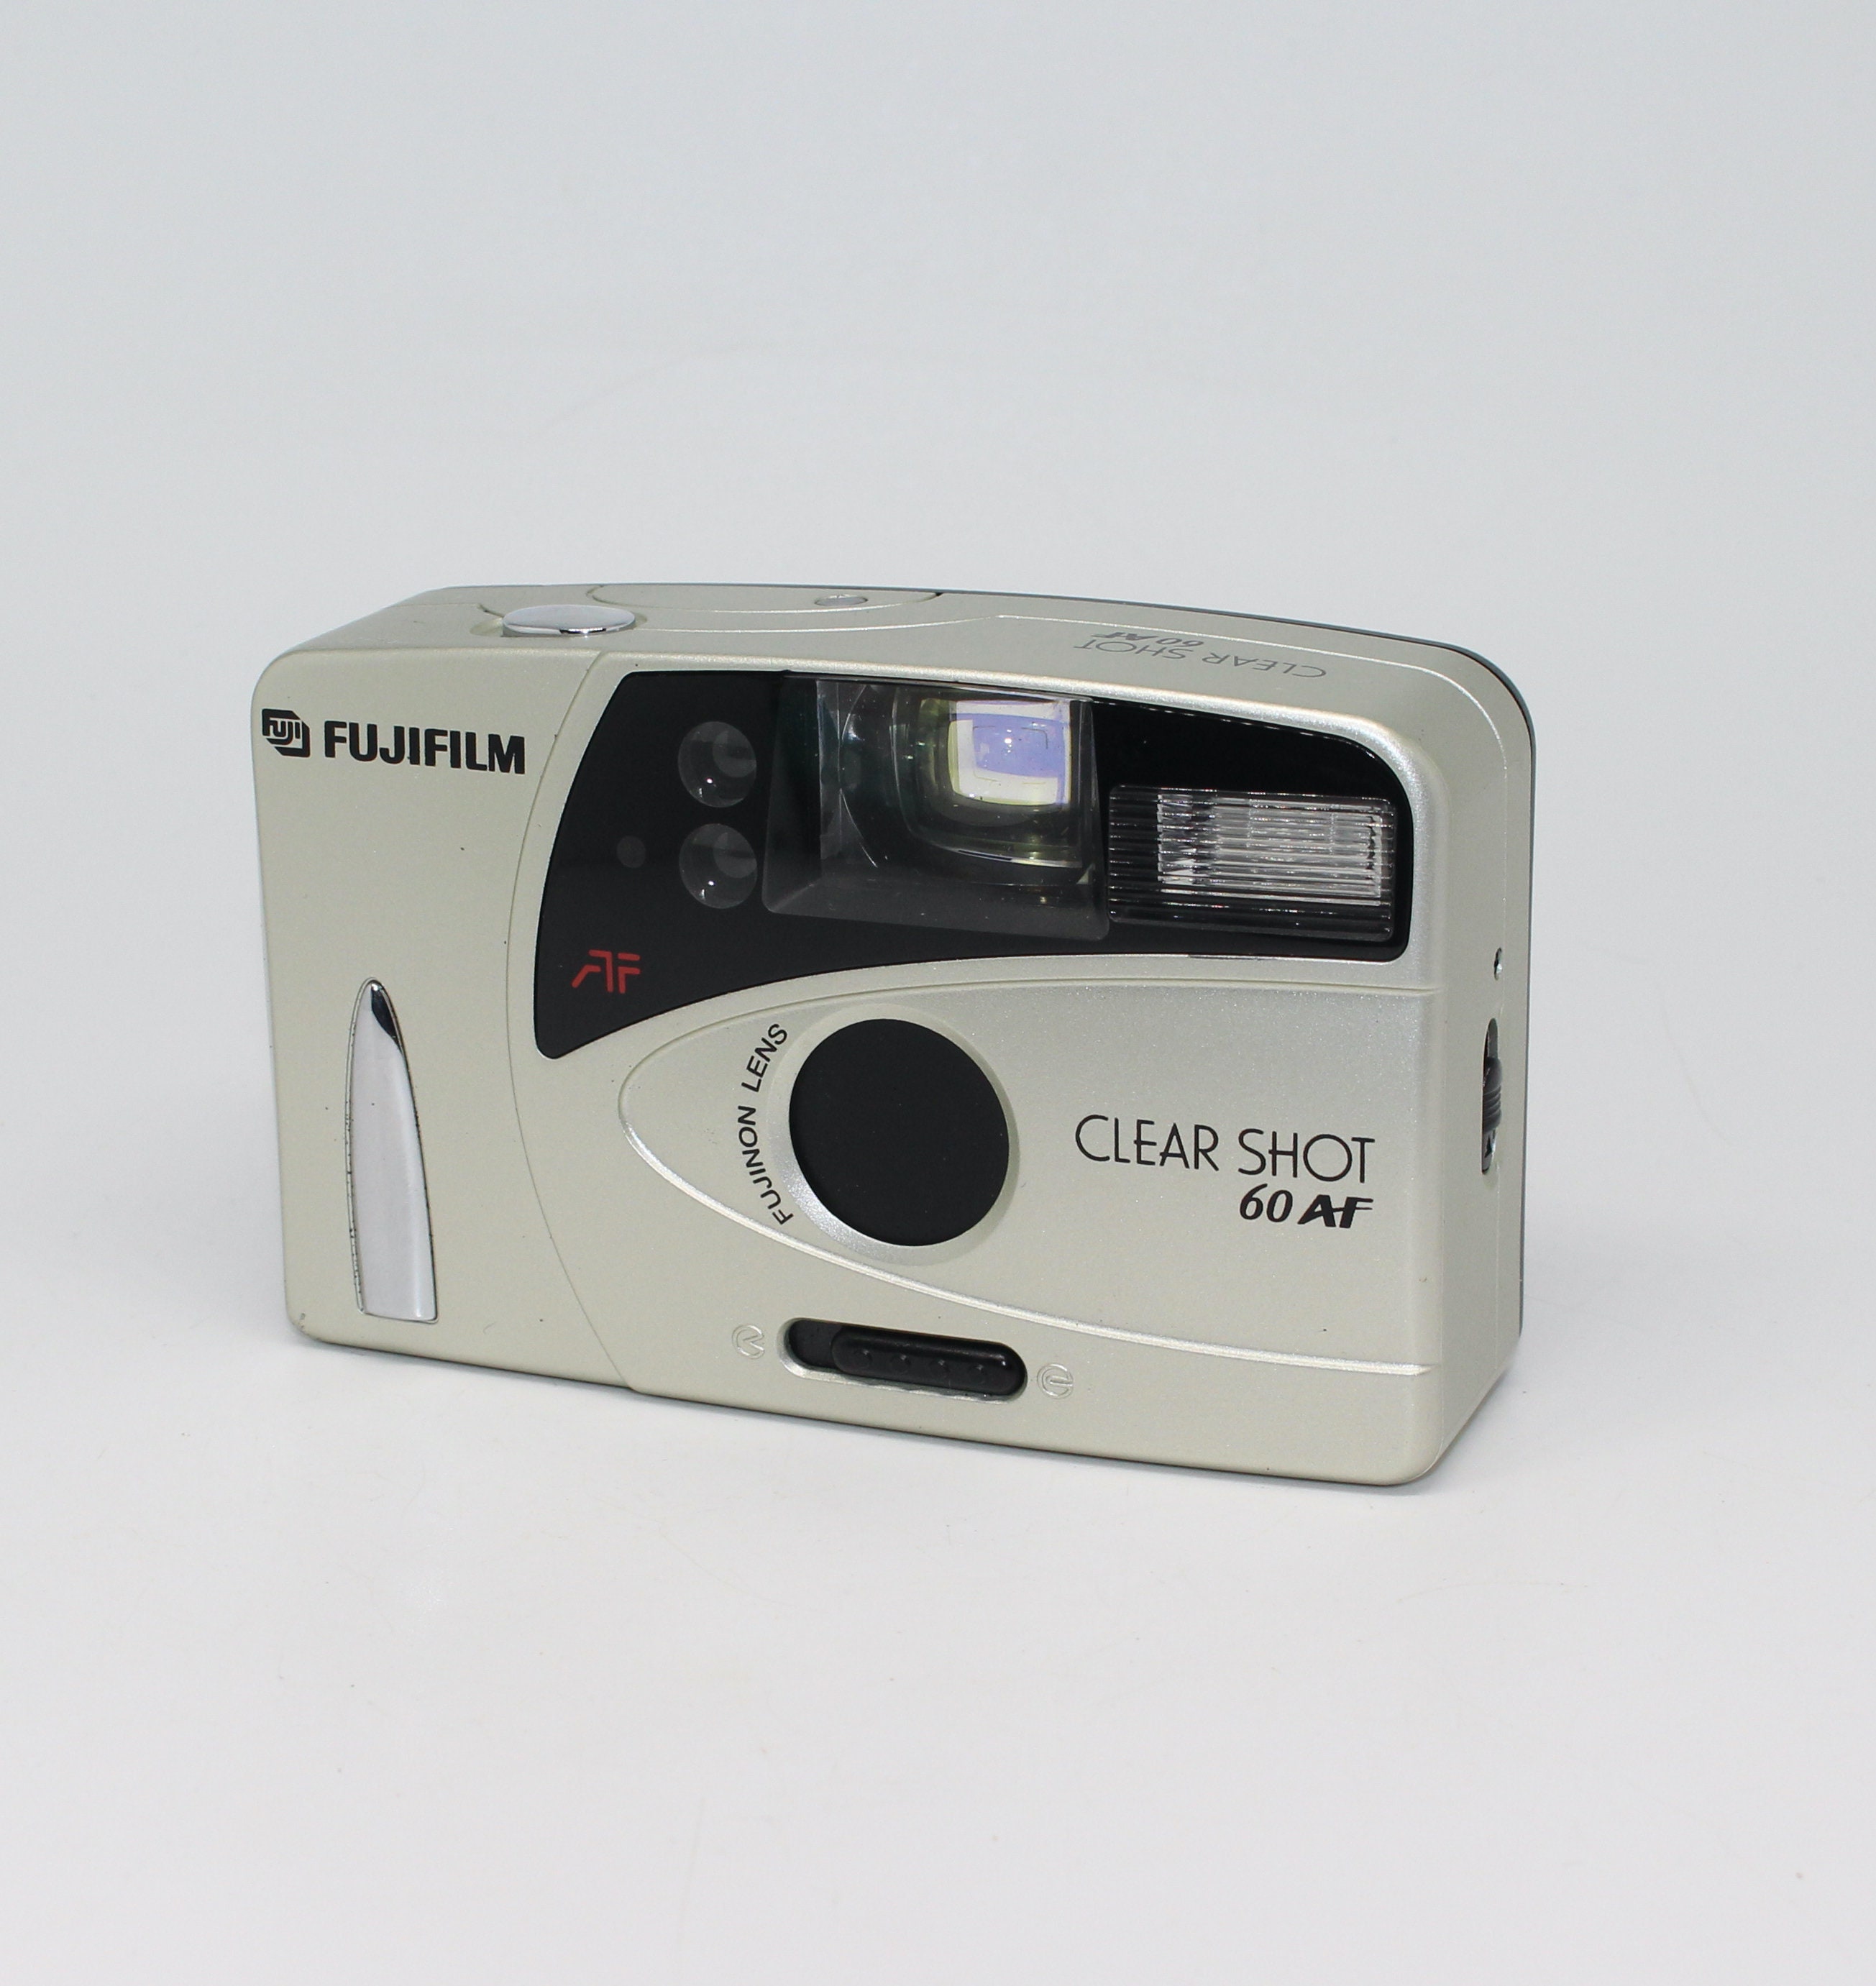 Fujifilm Clear Shot / Smart Shot 60 AF 35mm Film Compact photo